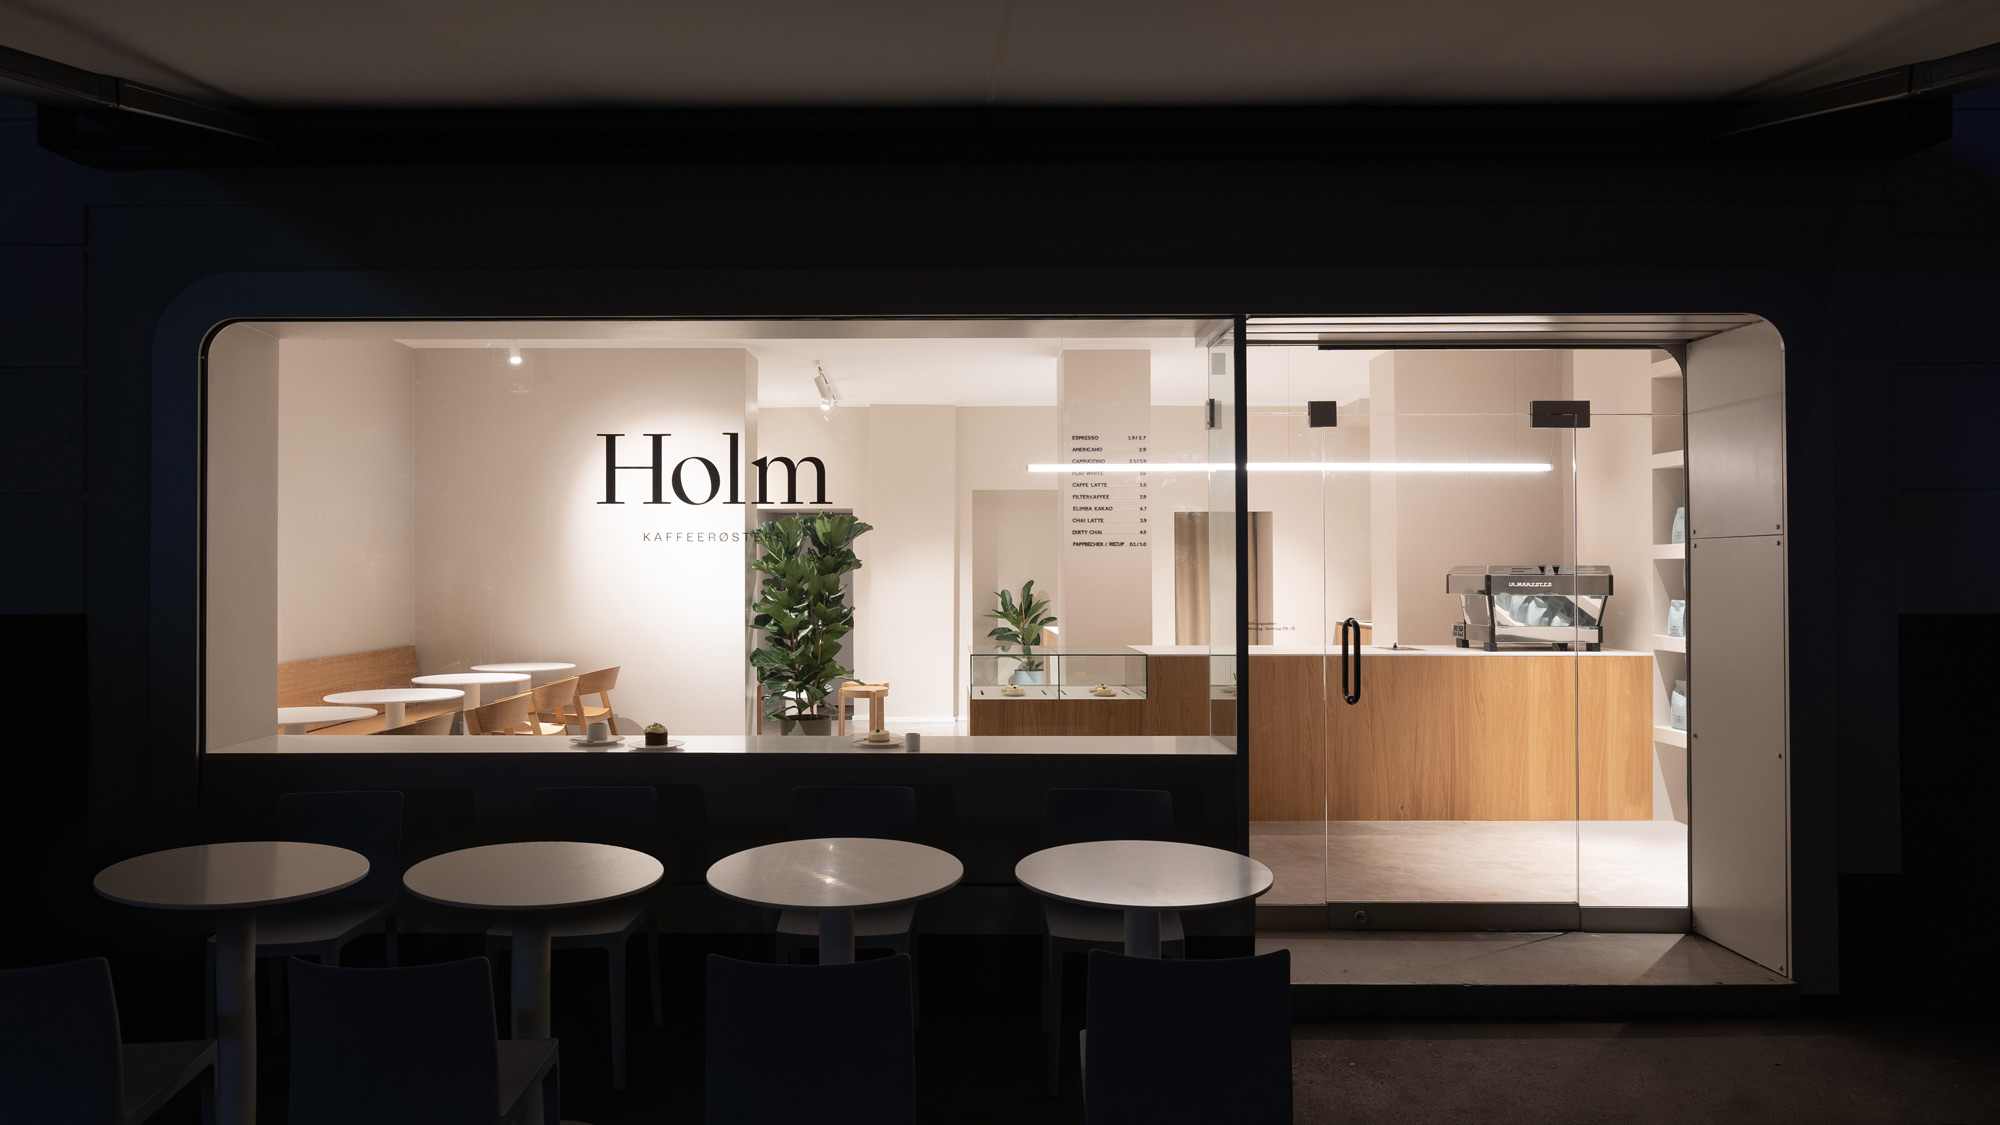 Gerdesmeyer Krohn
Office for Design Holm Café